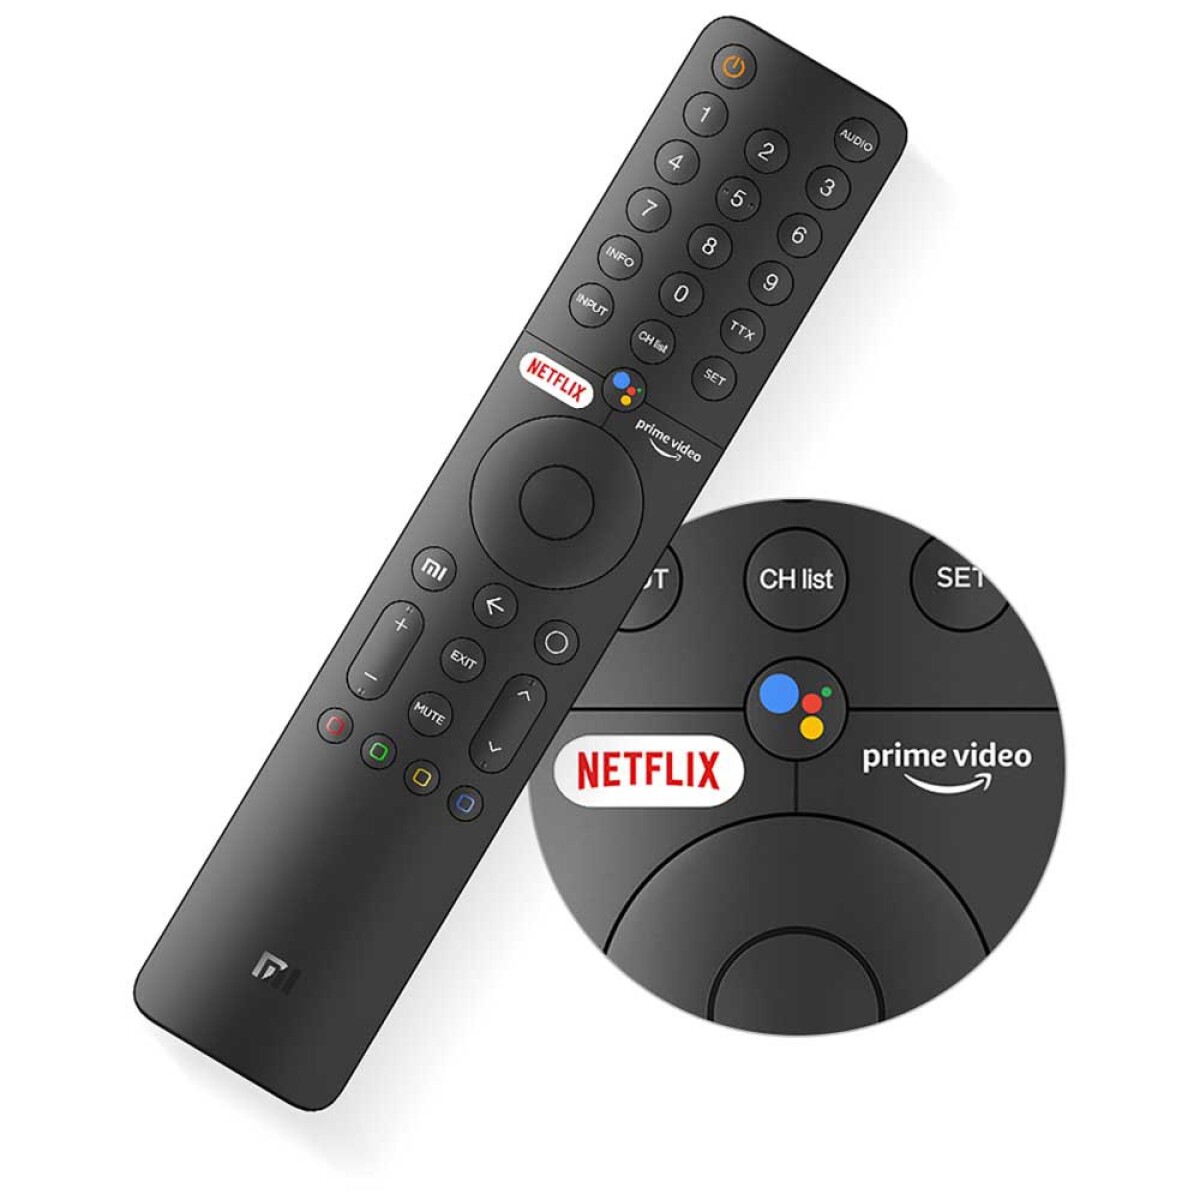 Smart tv xiaomi mi tv p1 50' 4k ultra hd | android tv | chromecast Negro